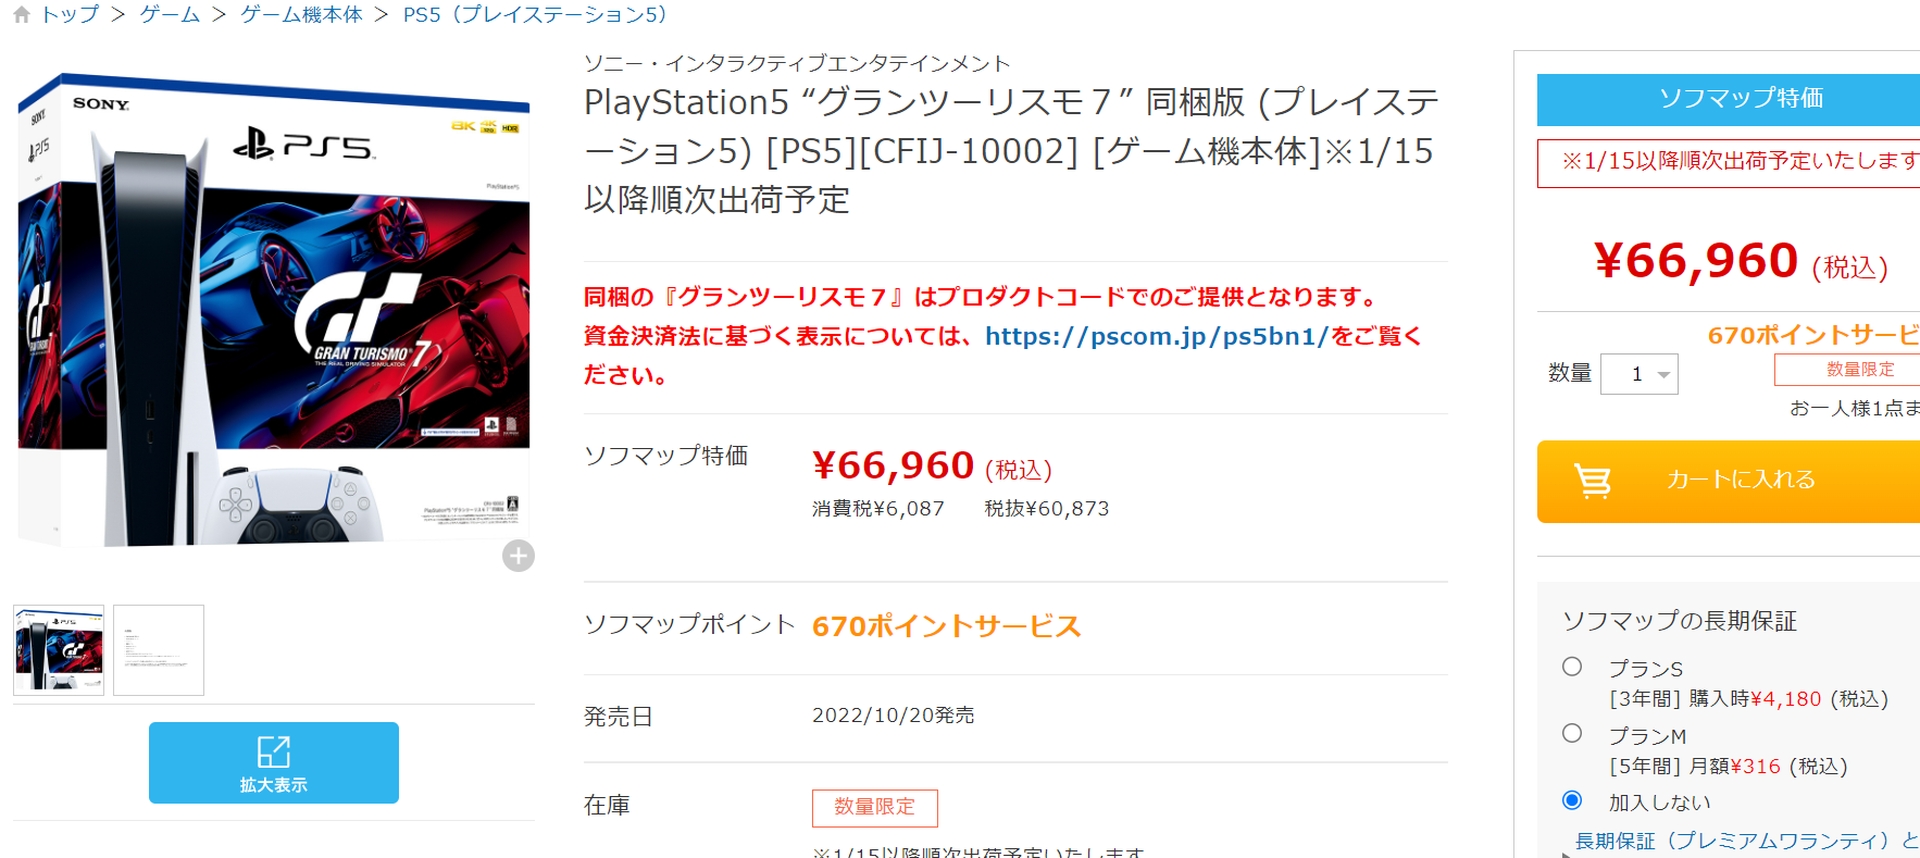 PS5「グランツーリスモ7」同梱版がアキバソフマップにて一般販売 